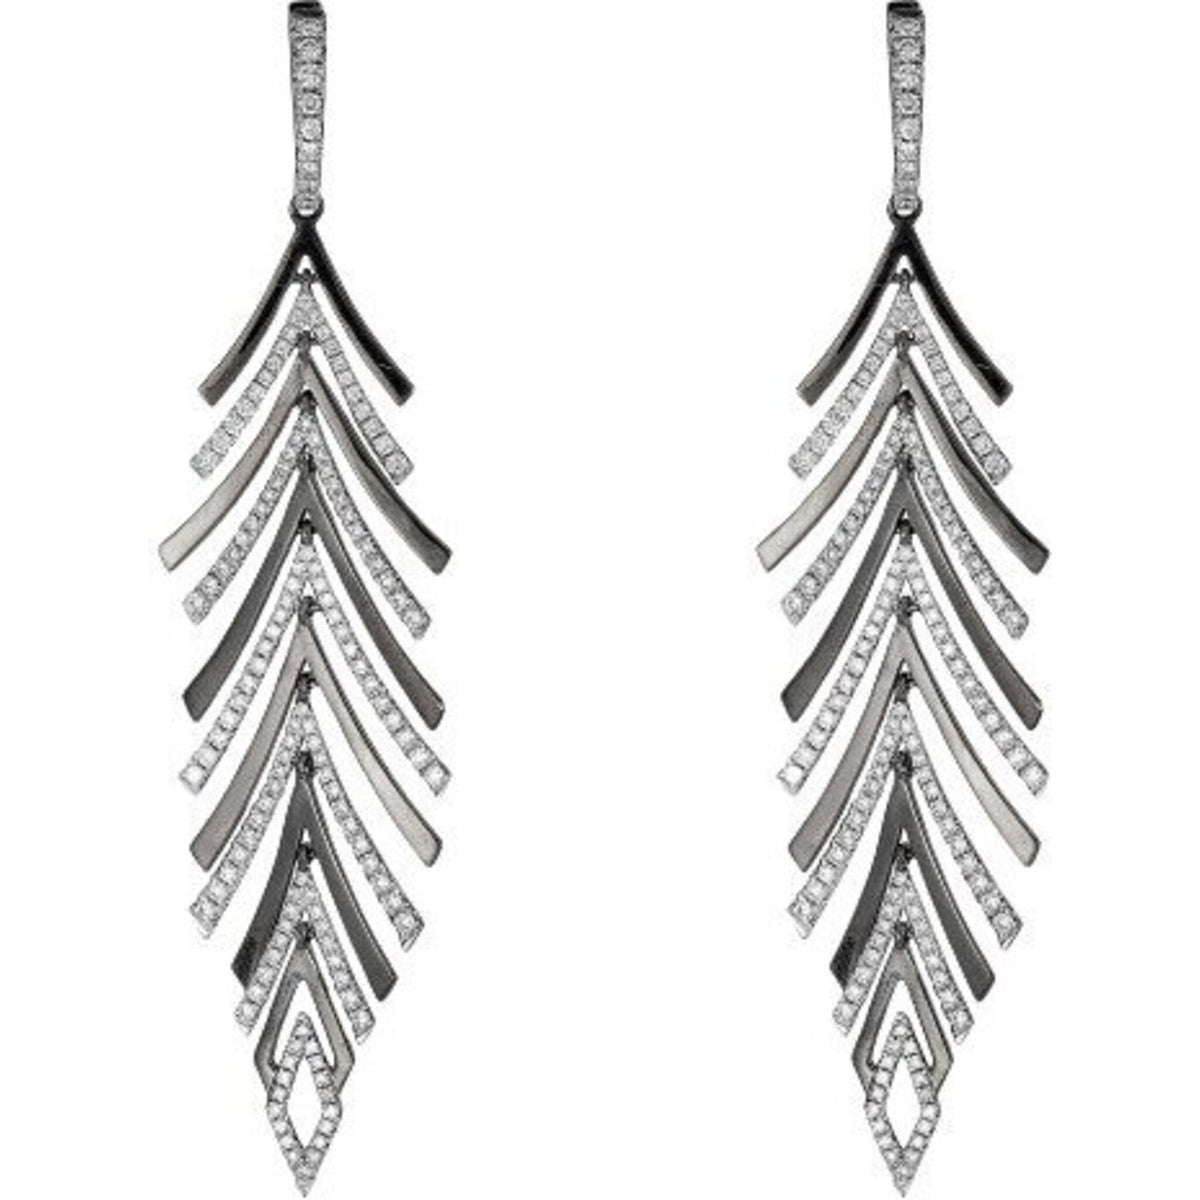 Piranesi - Pine Feather Earrings in Black Gold - 18K Black Gold